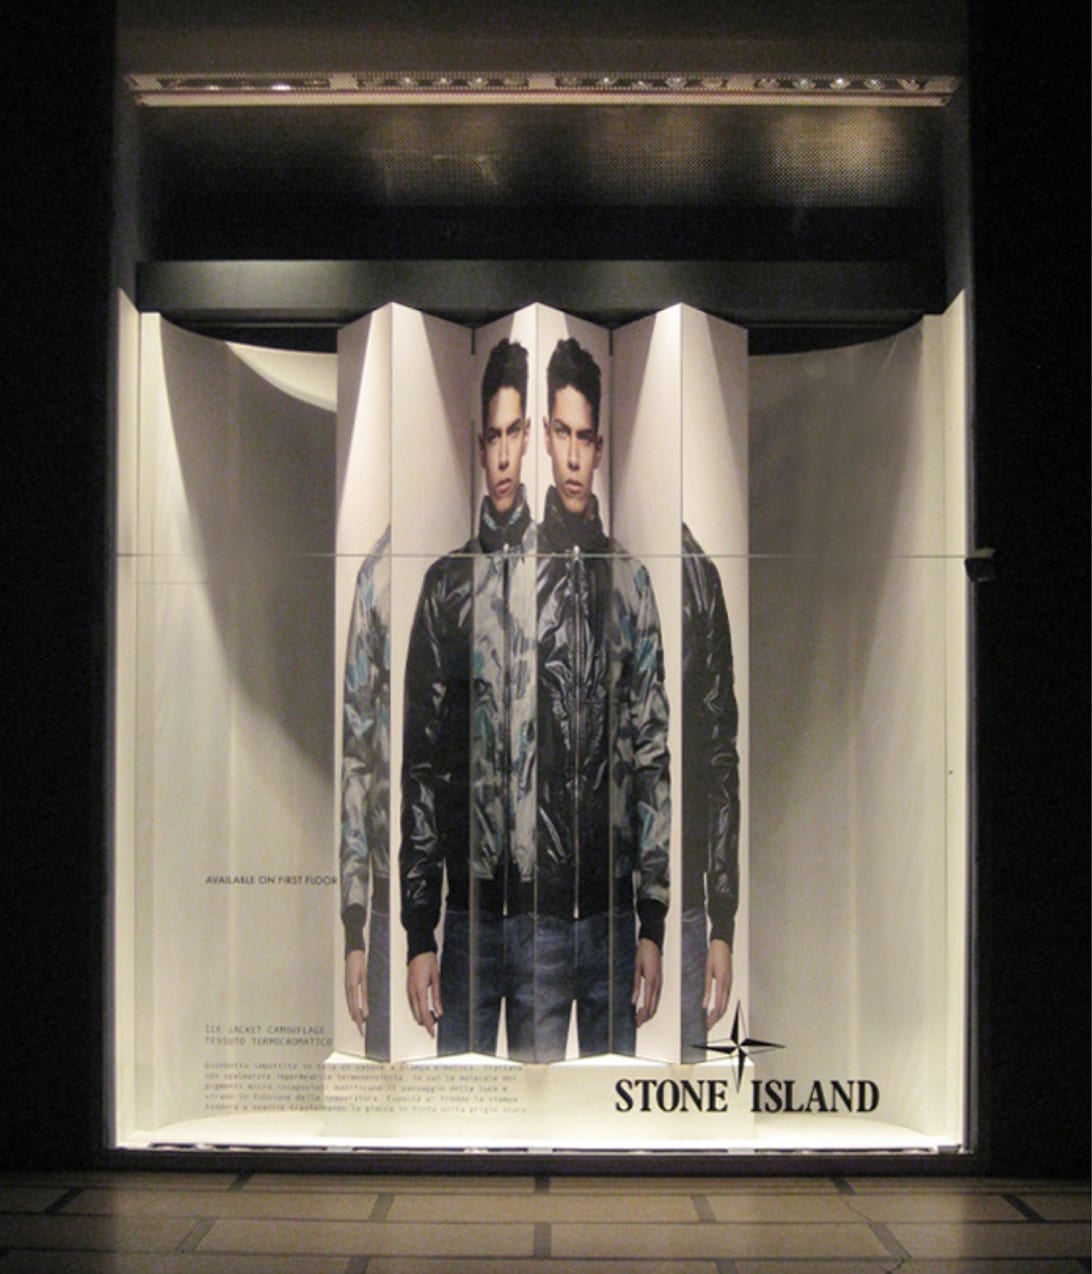 Stone Island heat reflective jacket shop window design